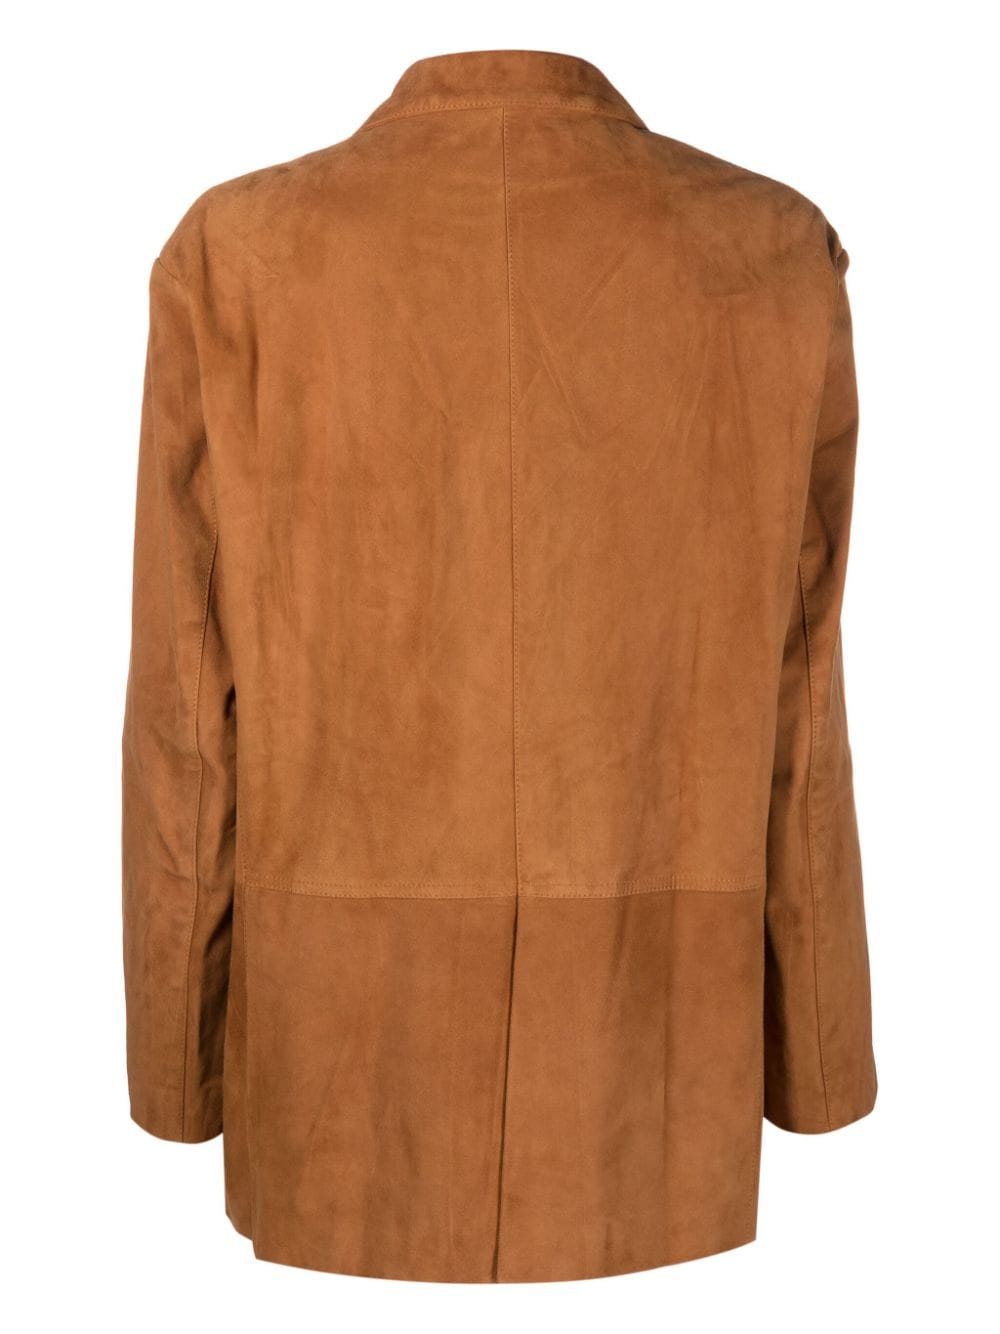 Manuel Ritz single-breasted leather jacket - Bruin